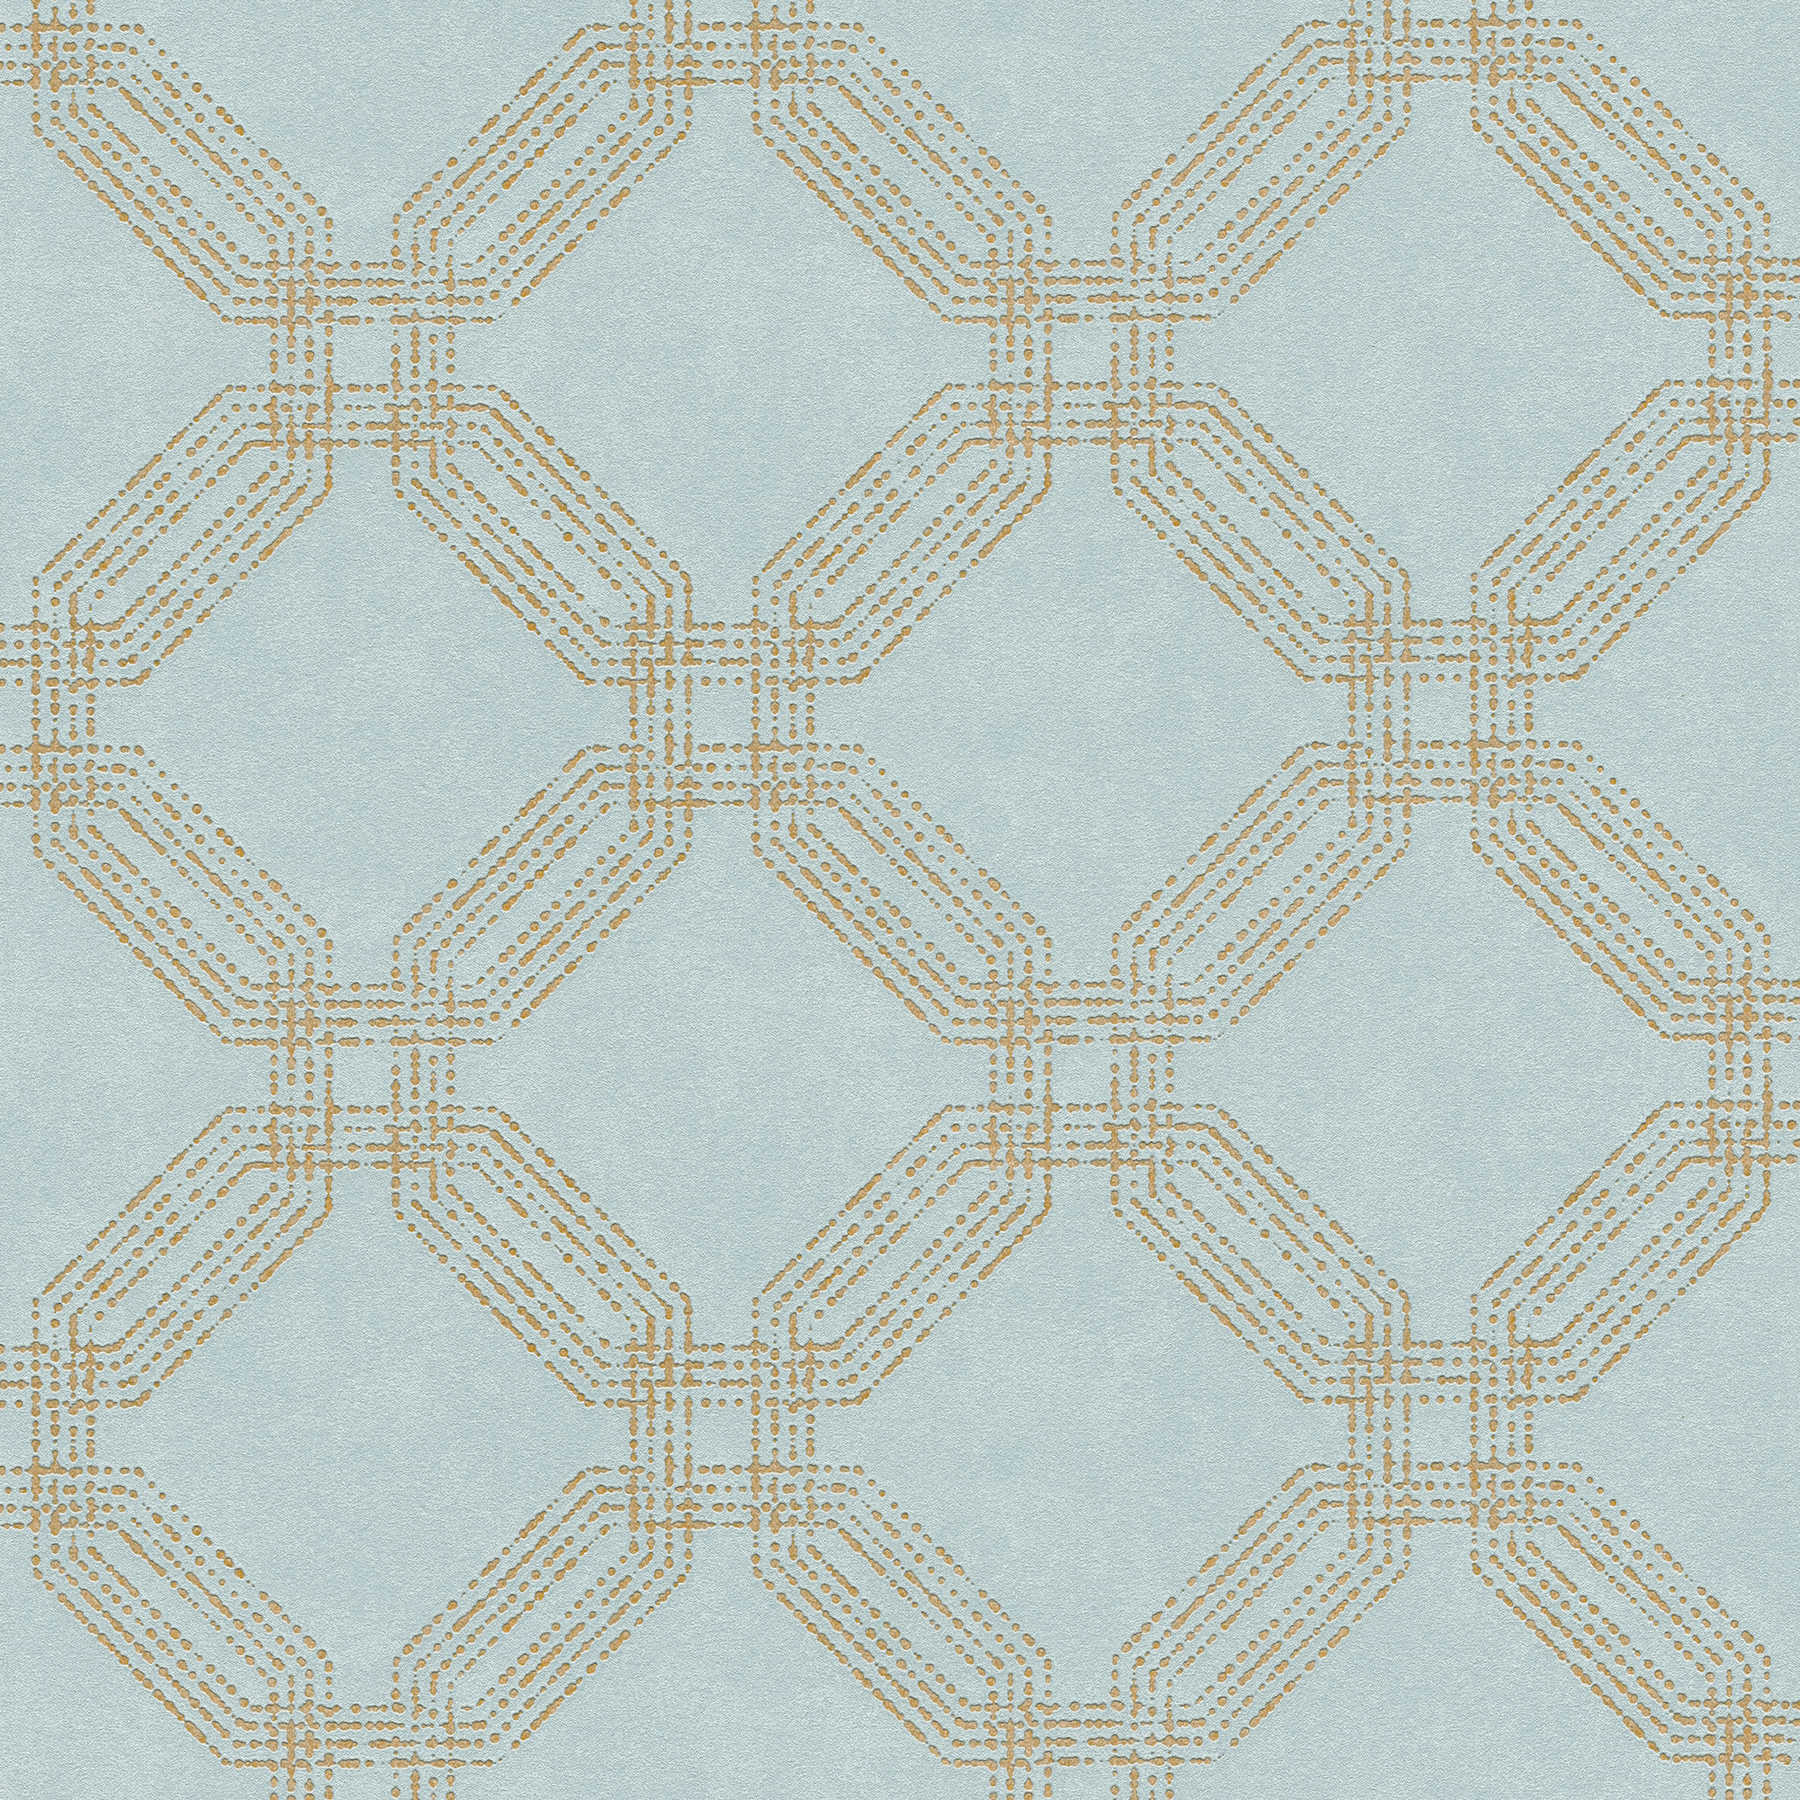 Geometric texture wallpaper with diamond look - blue, gold, green
